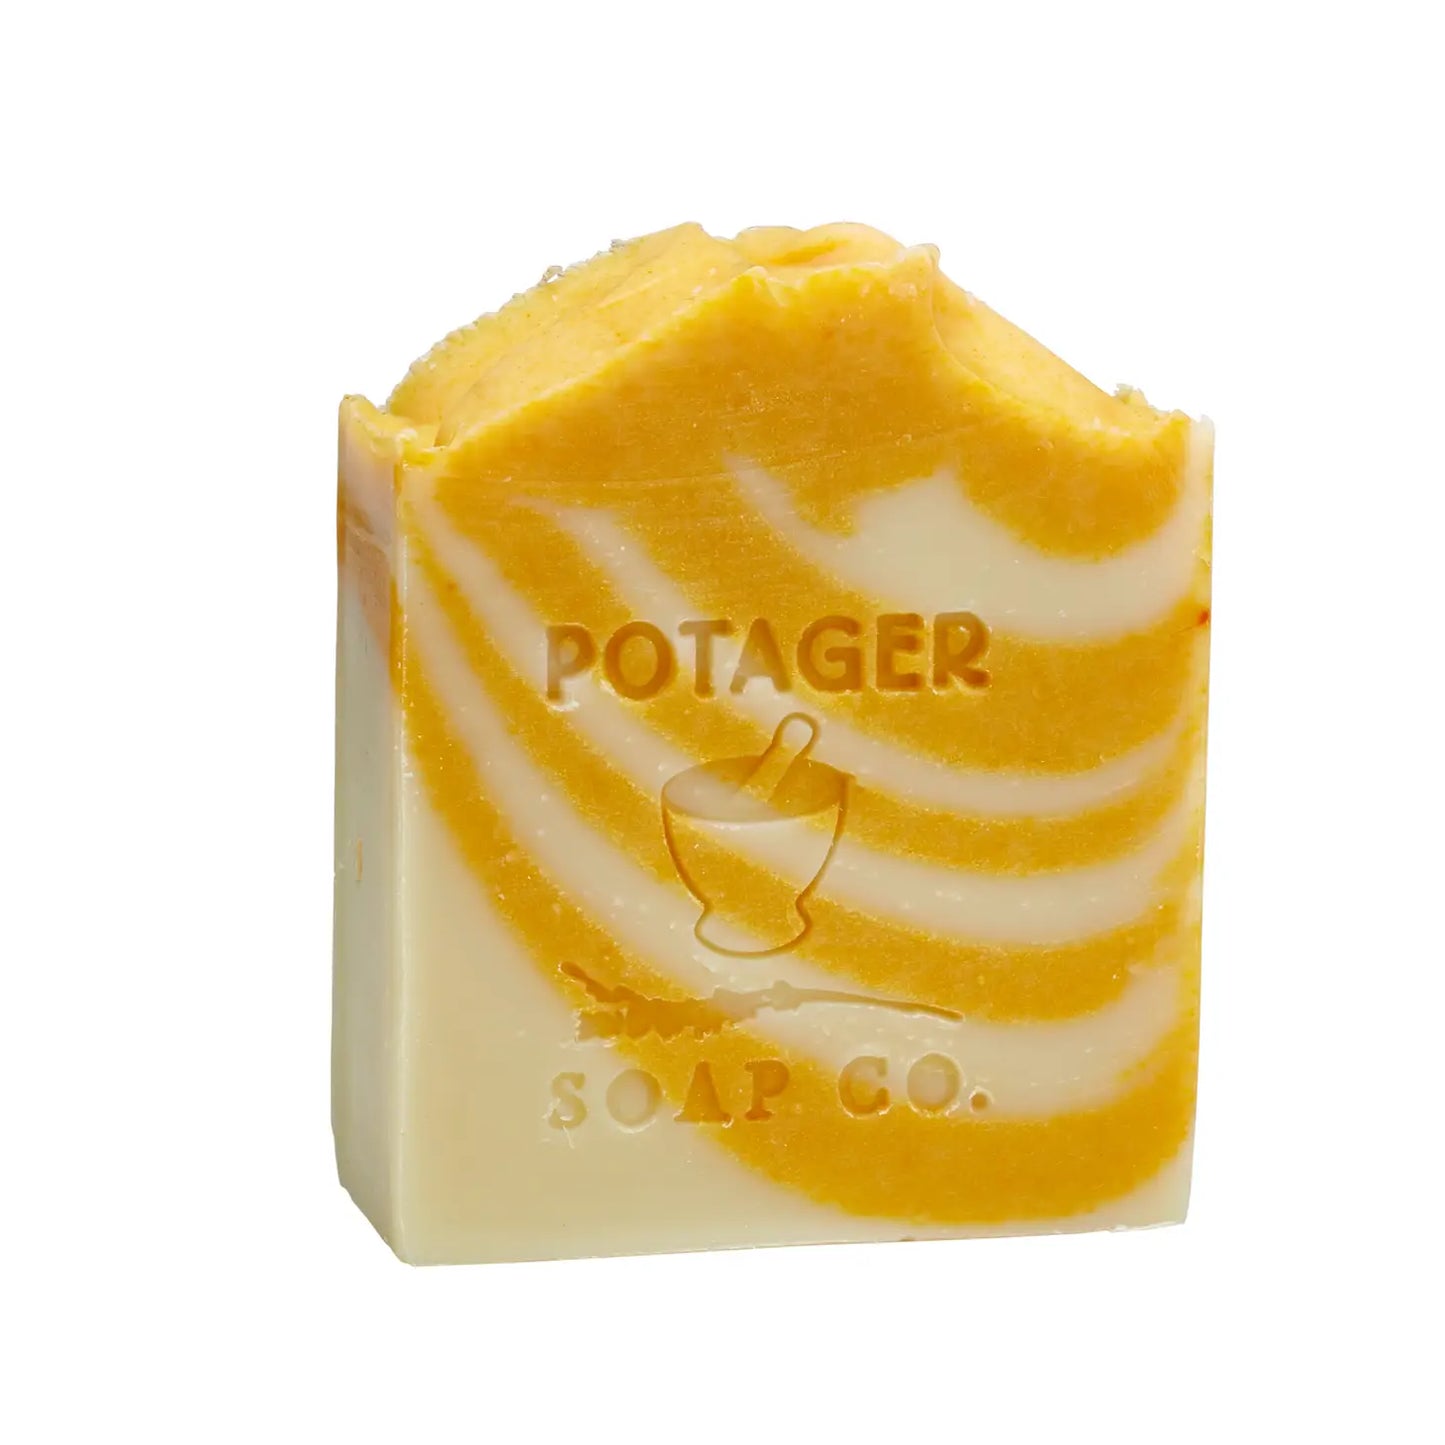 Bar Soap 4.5oz - Orange Dreamsicle